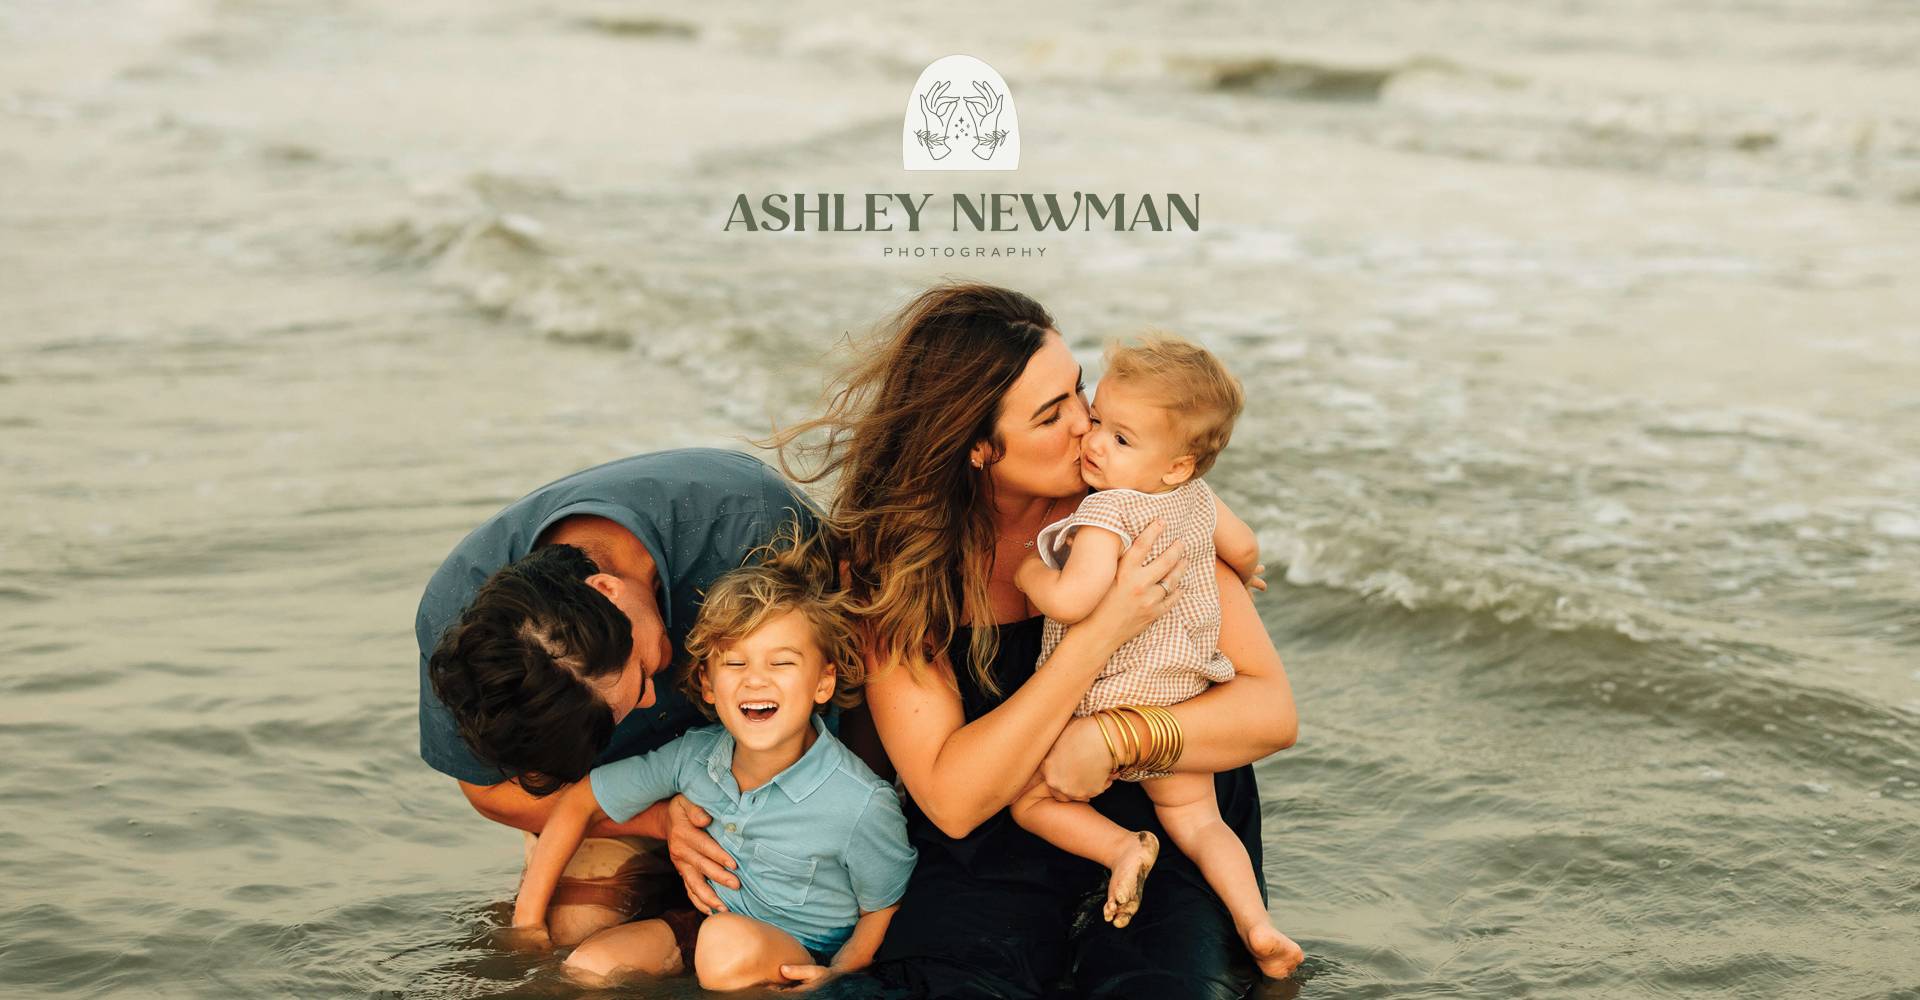 Ashley Newman Photography - Digital Marketing for Wedding Photographers - Brandlink Media Marketing Agency 1